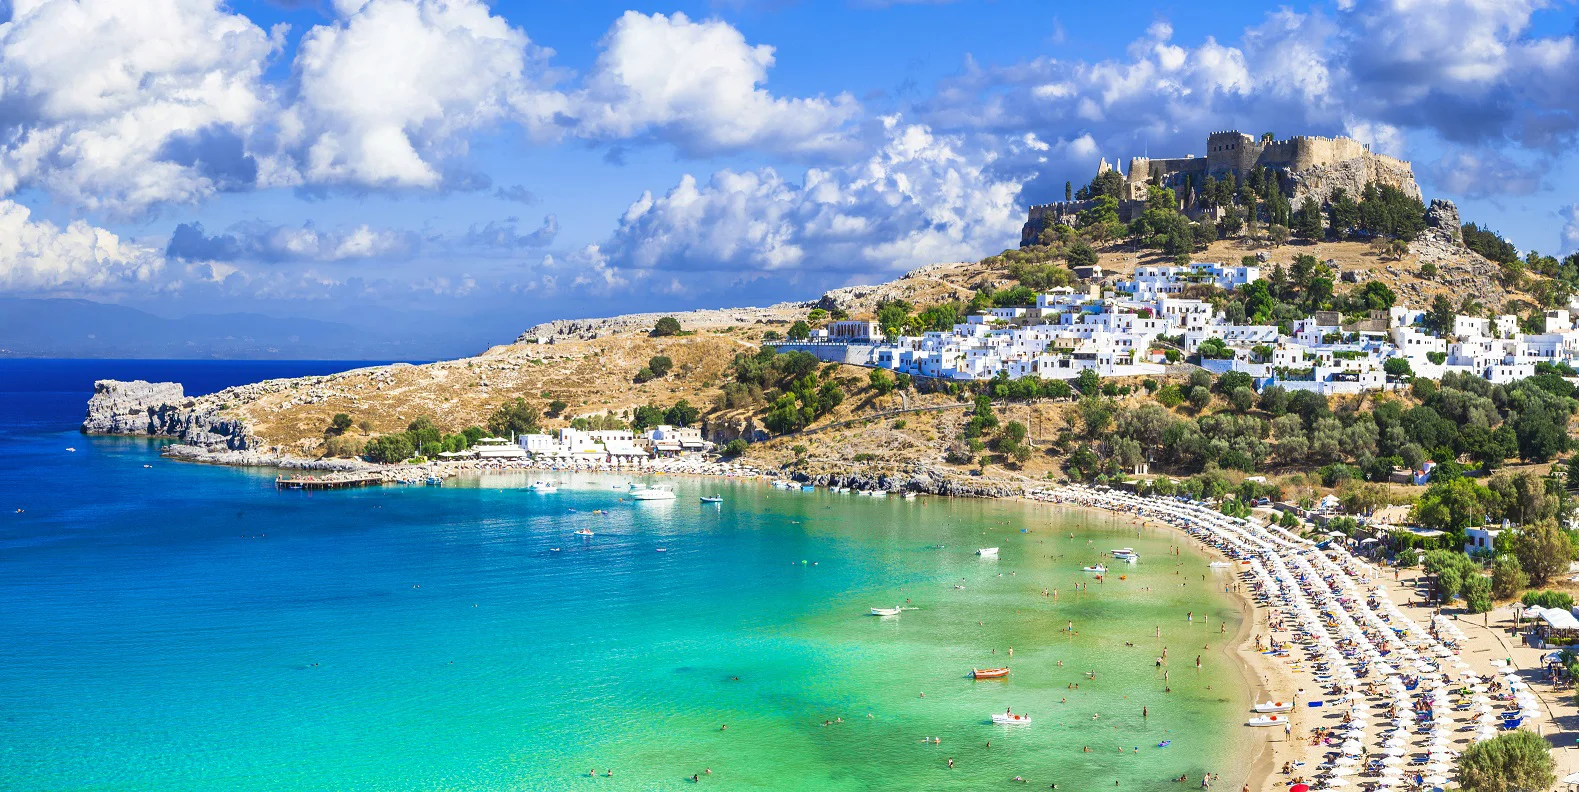 Vacanțe în Grecia, taxe